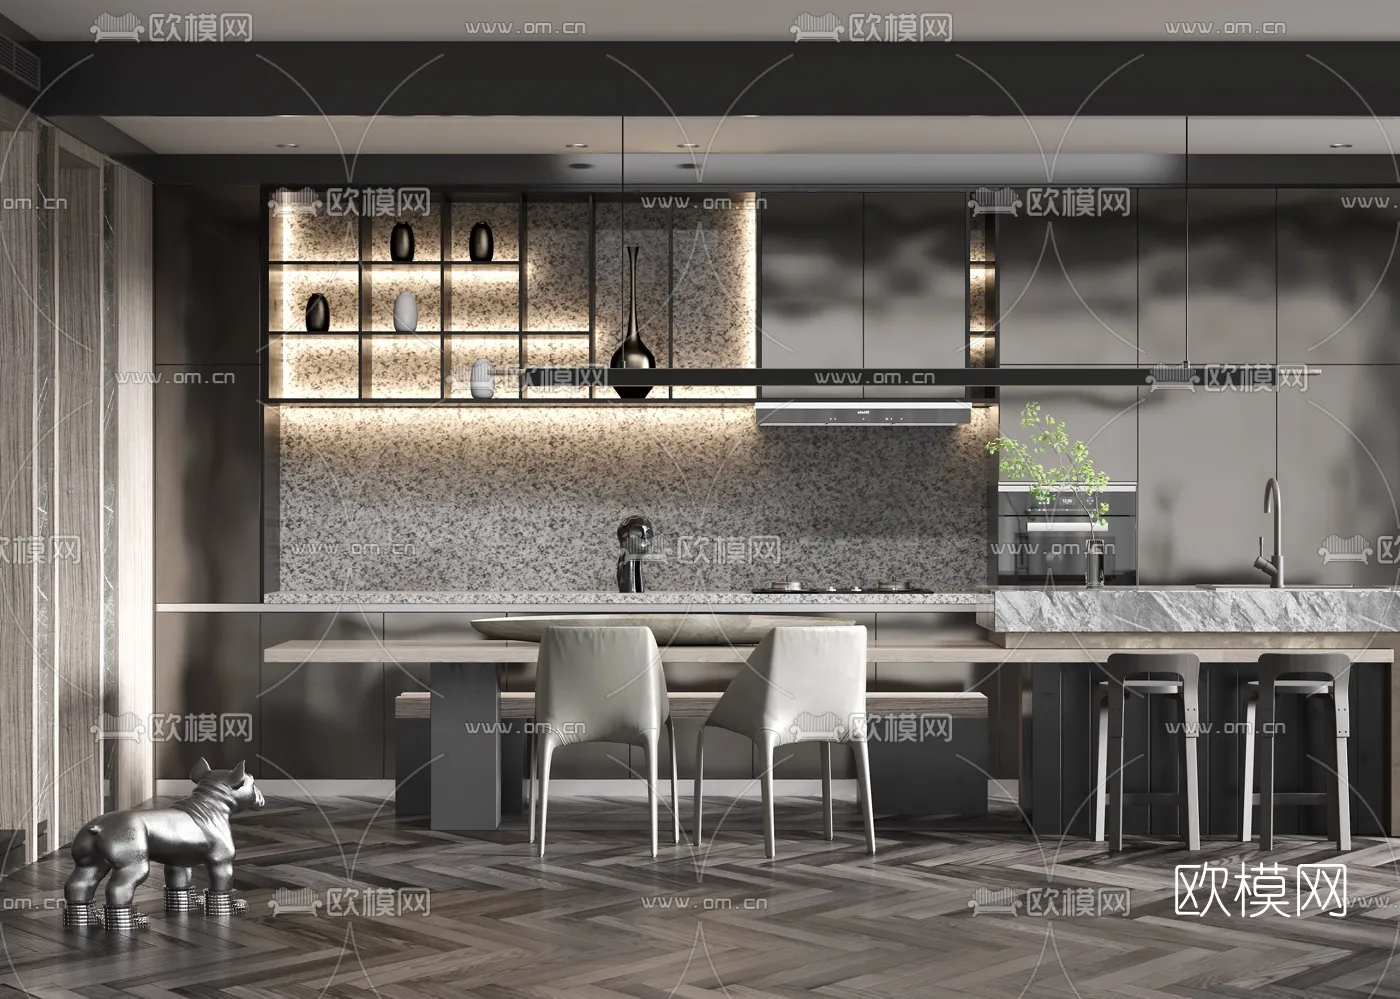 Kitchen 3D Scenes – 1059